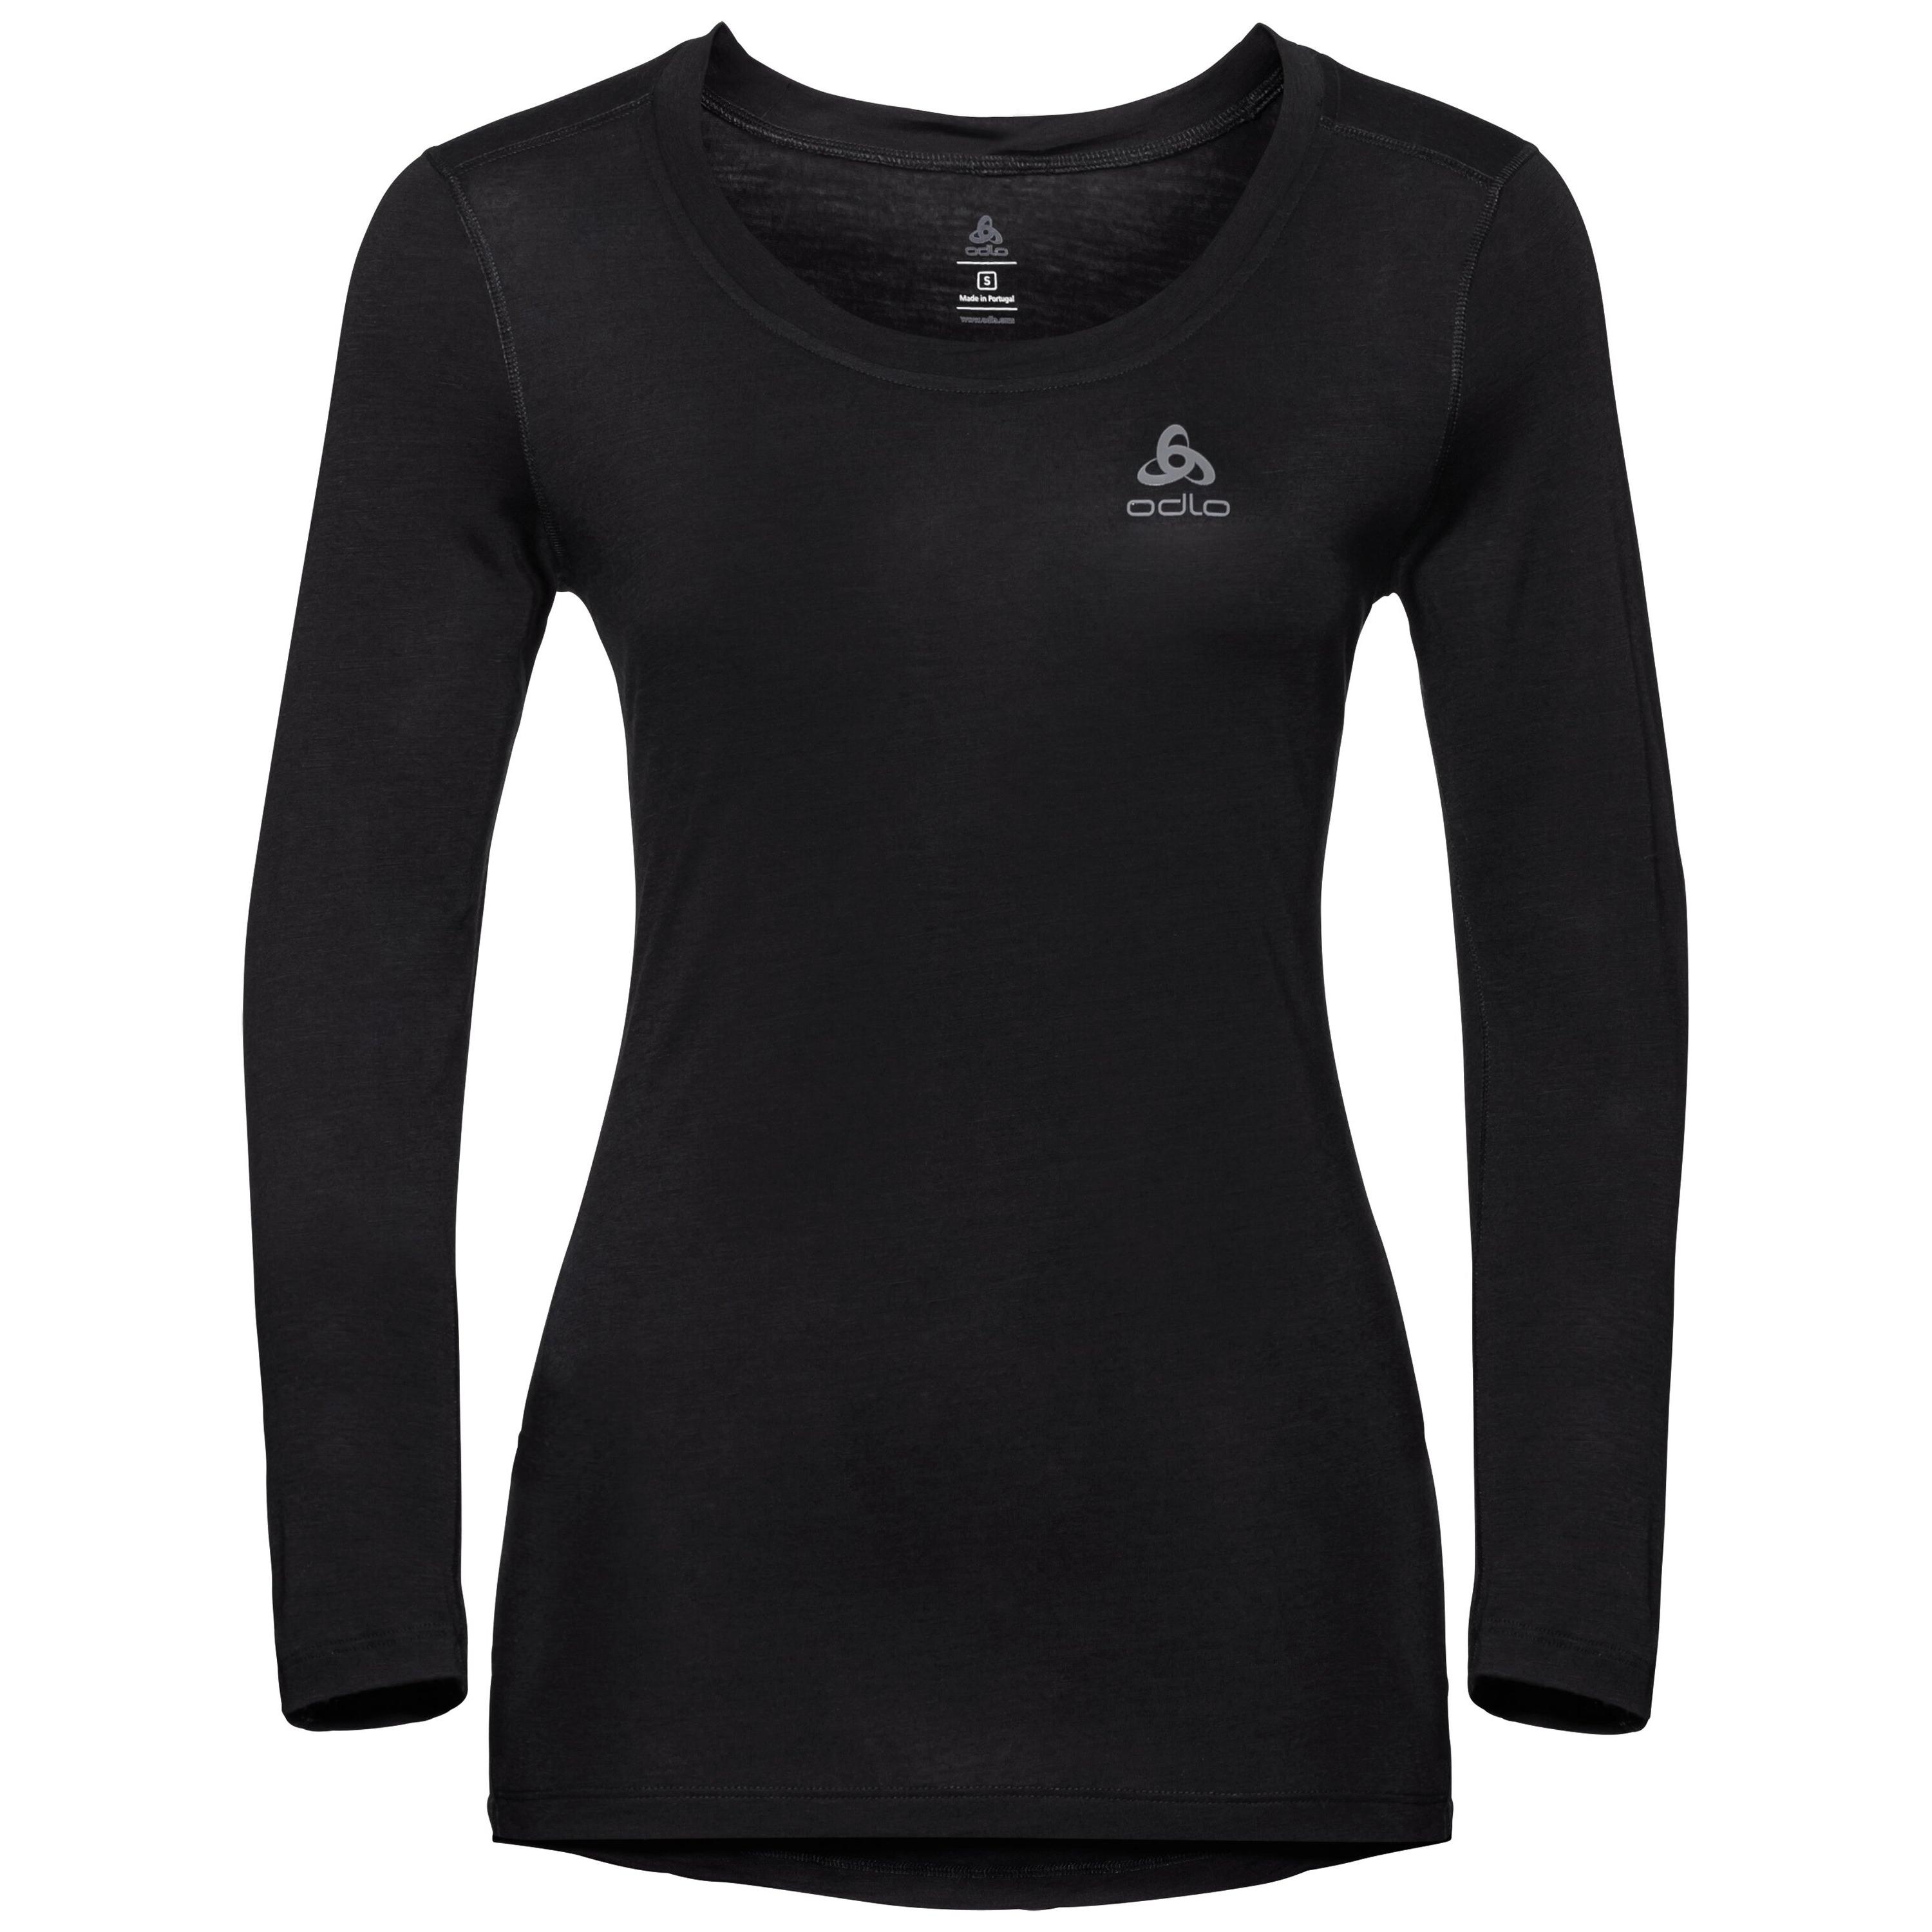 ODLO Performance Wool Light Base Layer Langarm-Shirt für Damen, XS, schwarz